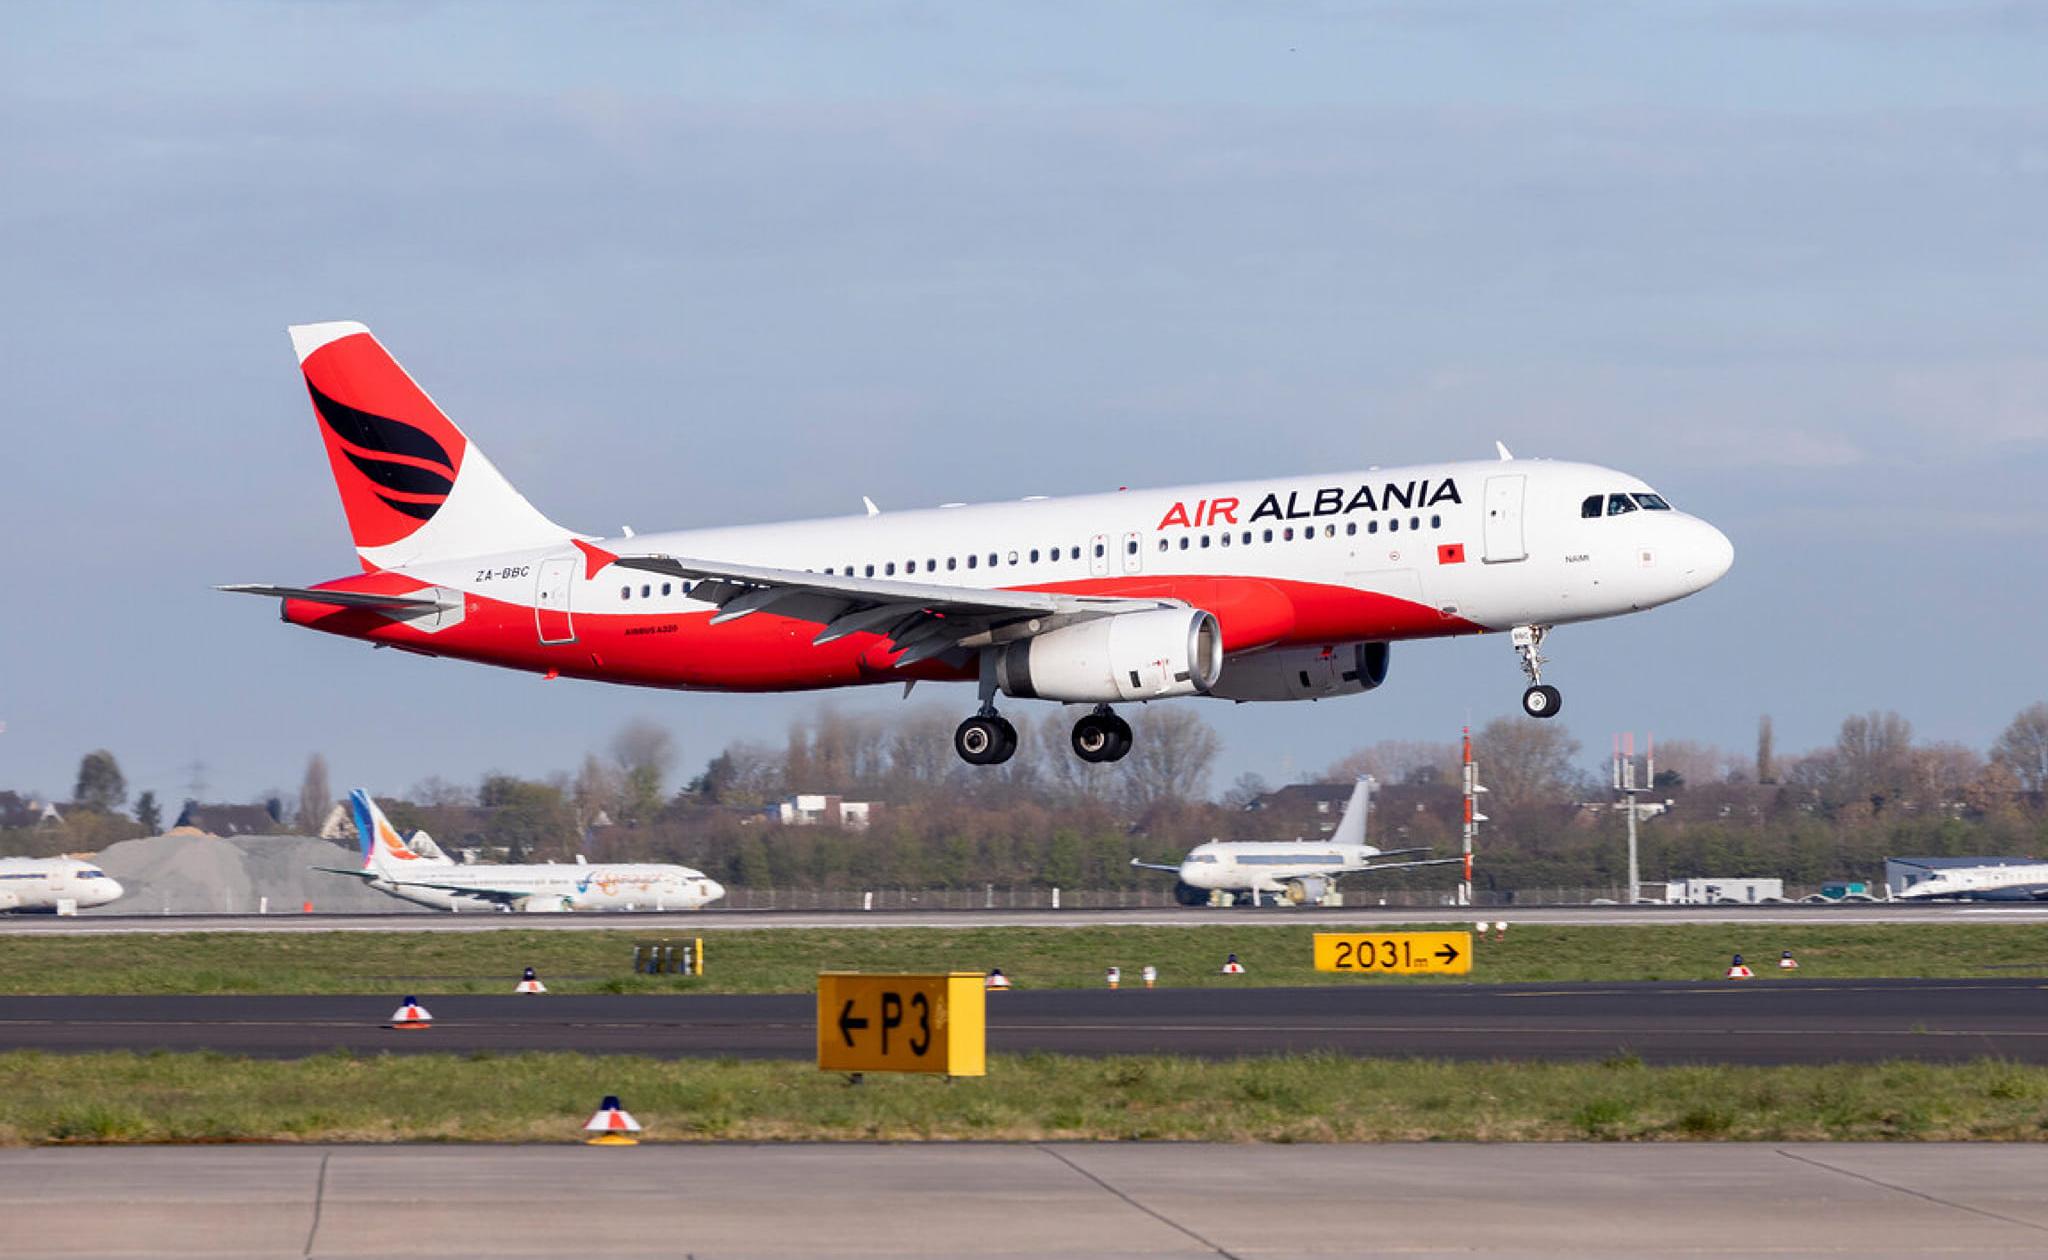 Air Albania landing